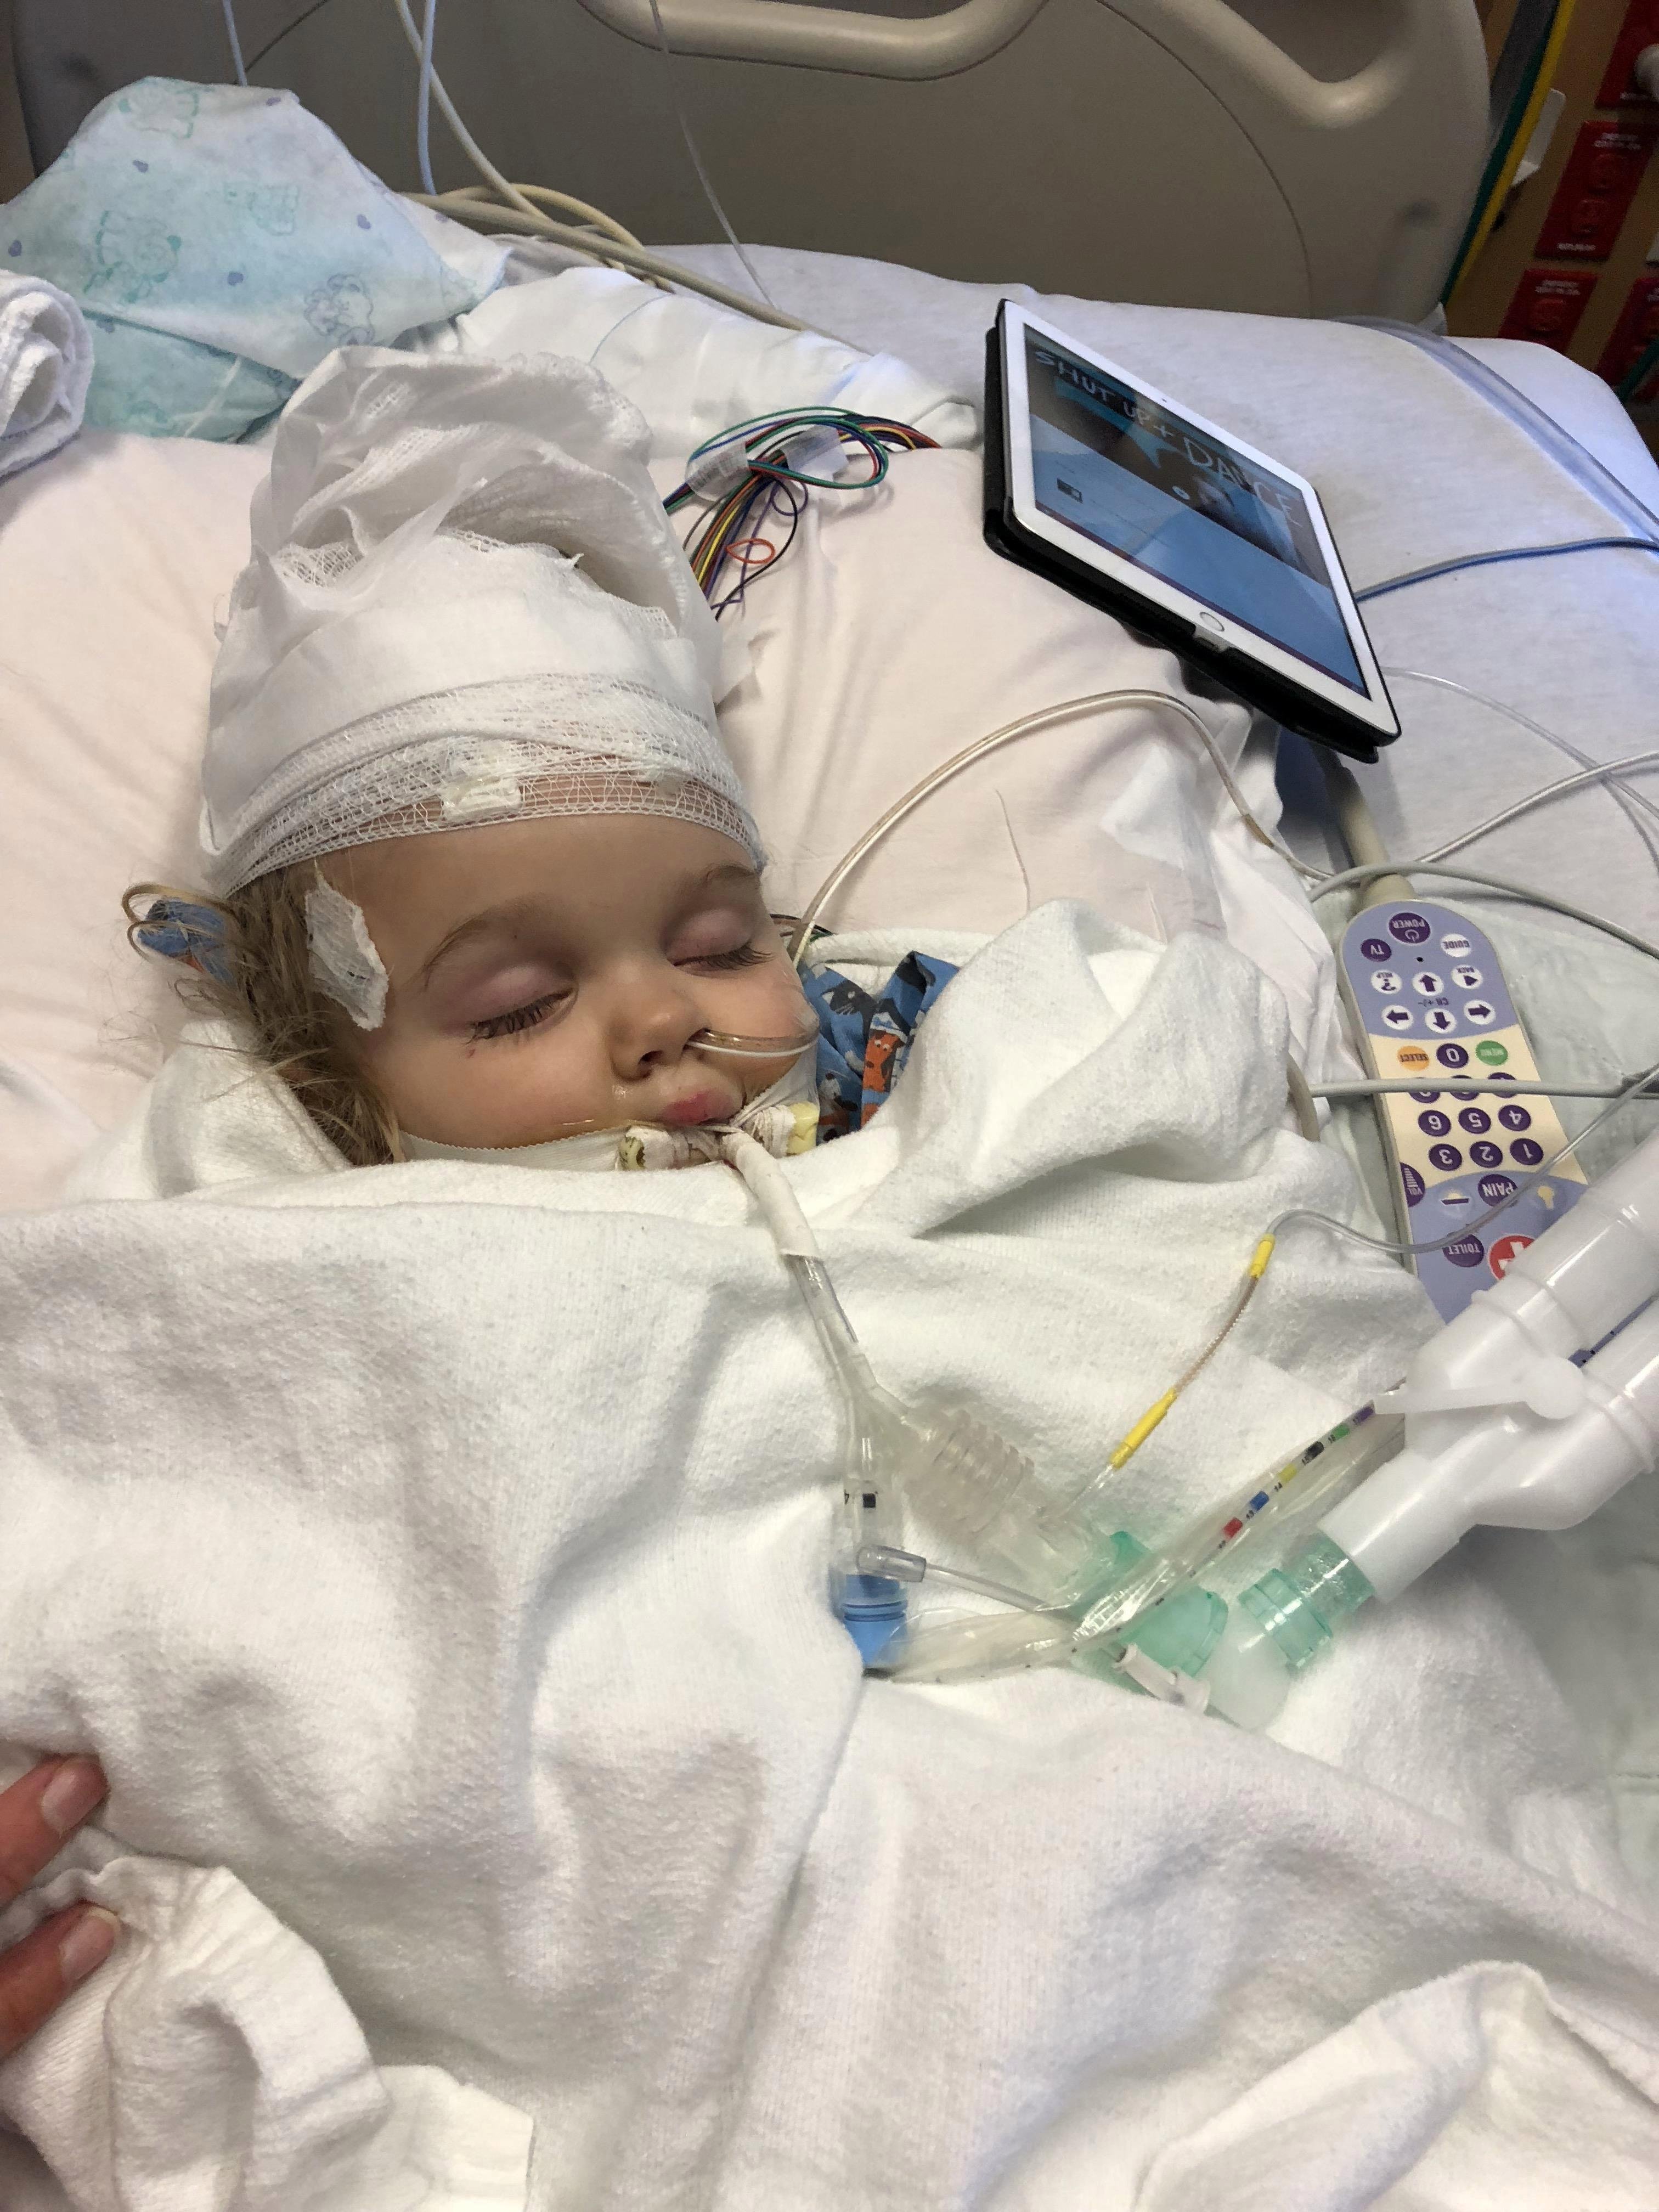  Little Grace Smolinski was struck by a terrifying rare disease